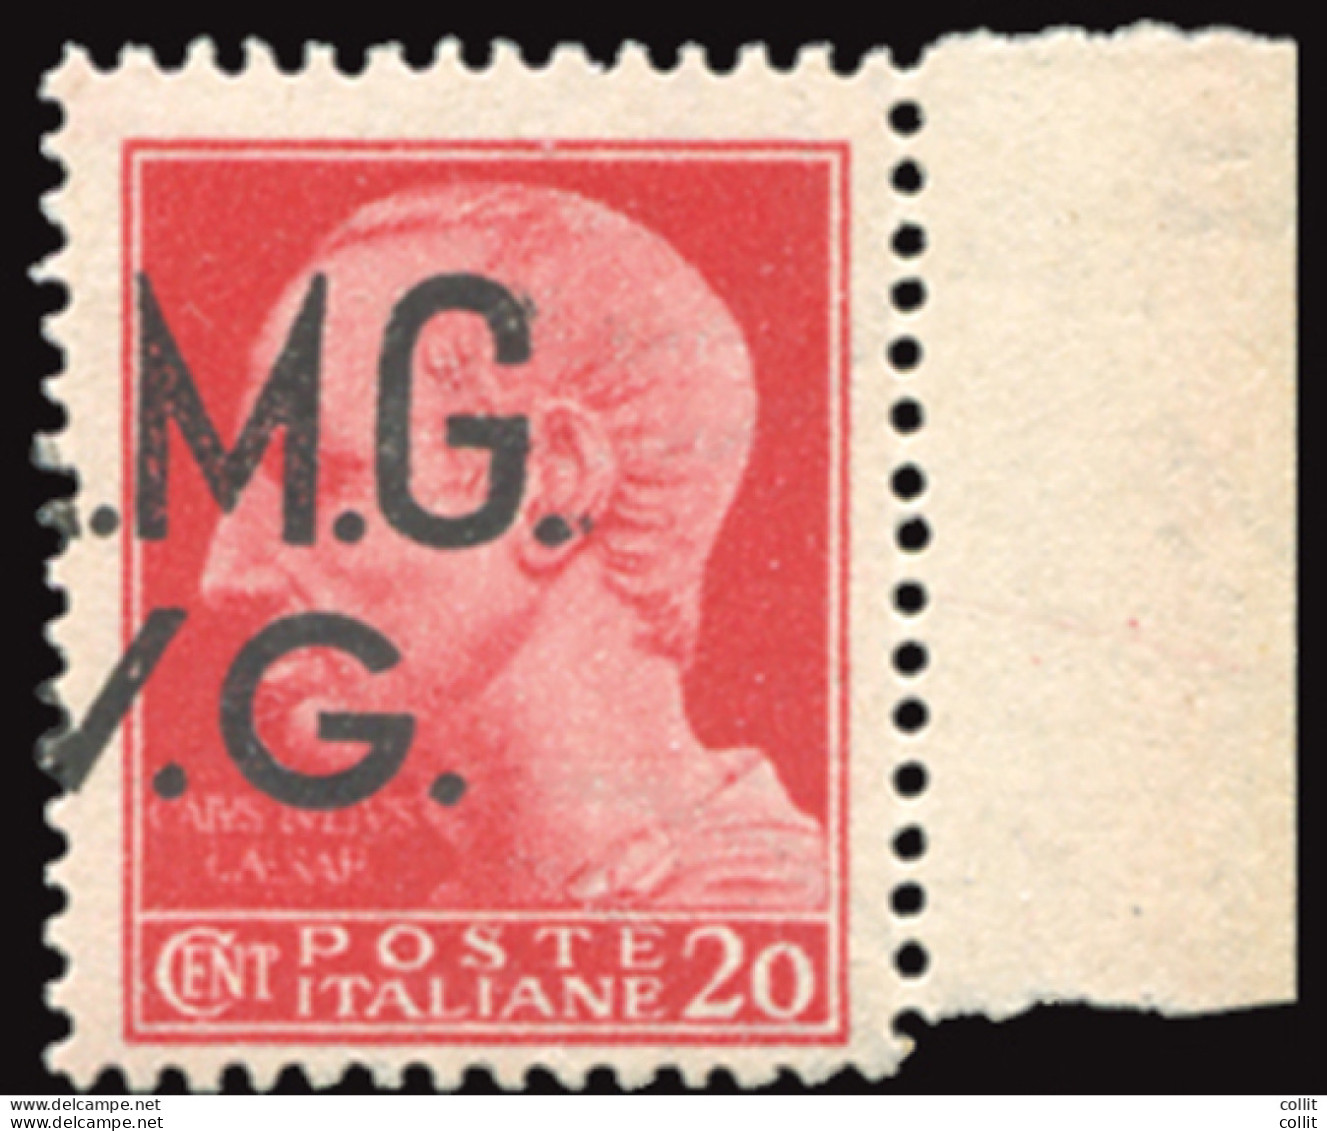 AMG. VG. - Cent. 20 Varietà Soprastampa Solo M.G./V.G. - Mint/hinged